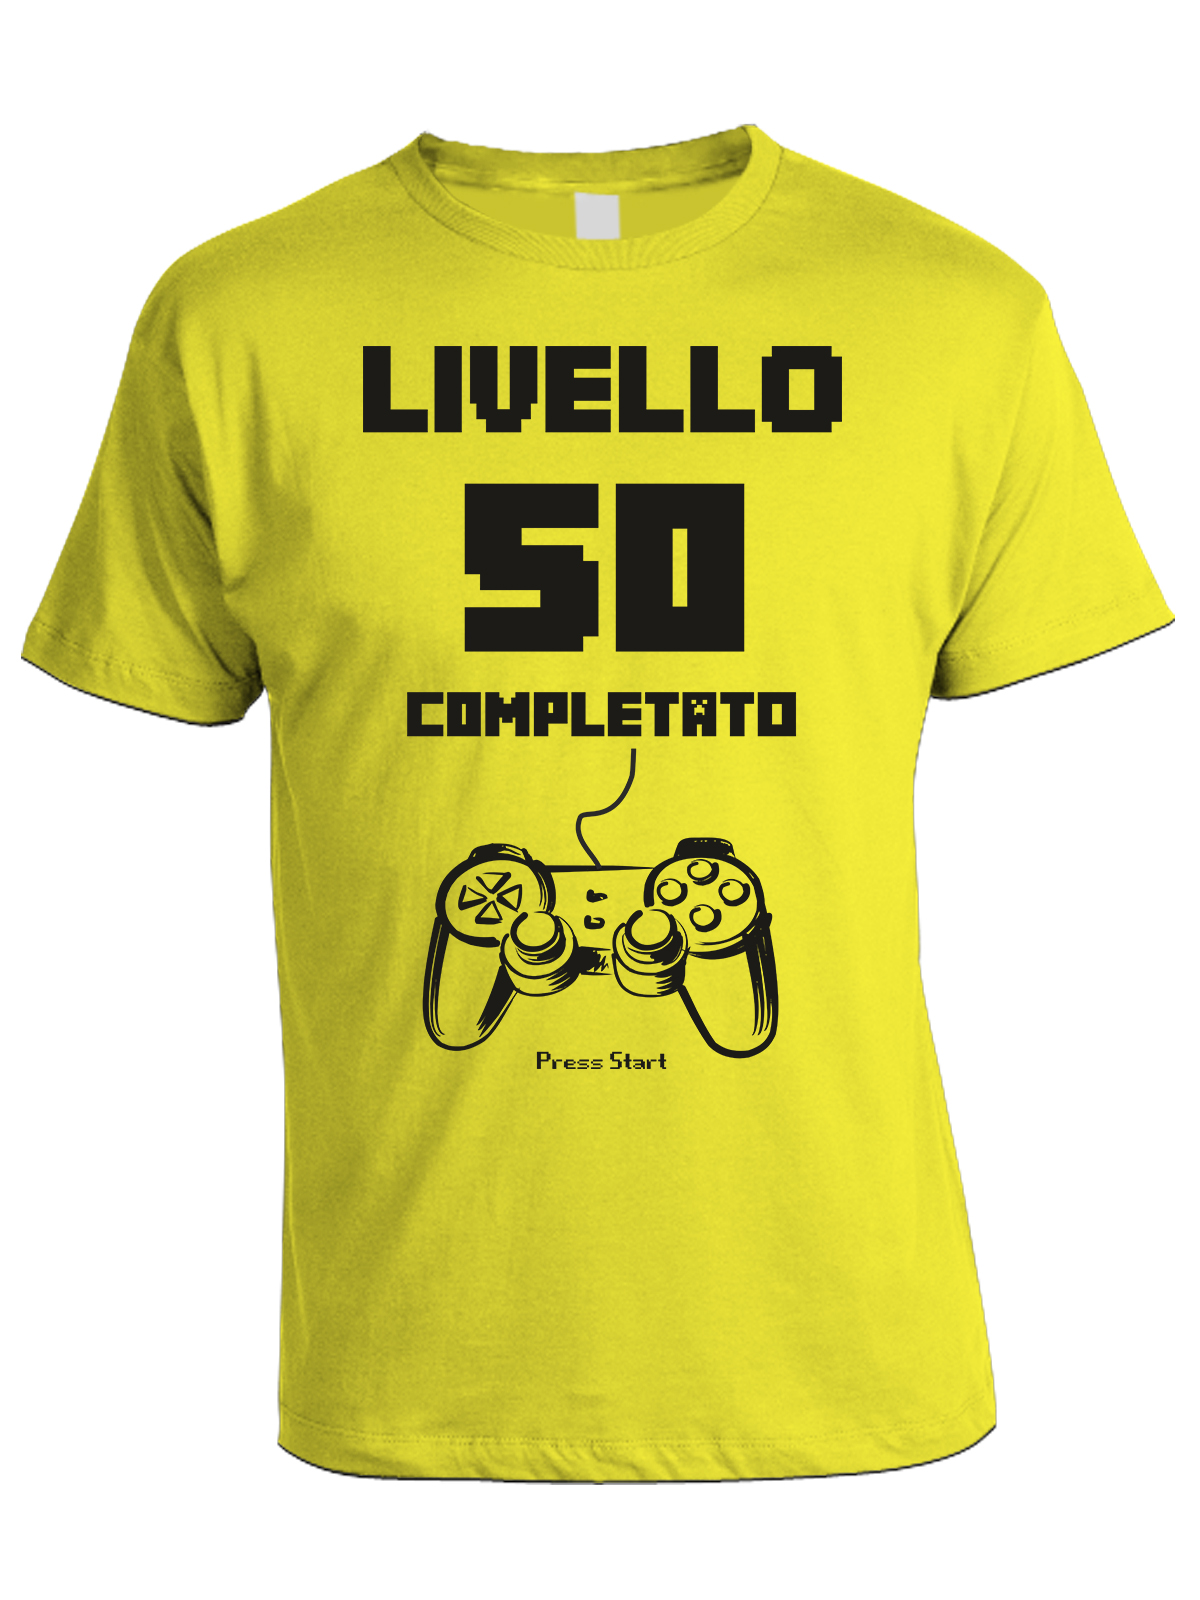 Tshirt Compleanno livello 50 completato - 50 anni - tshirt